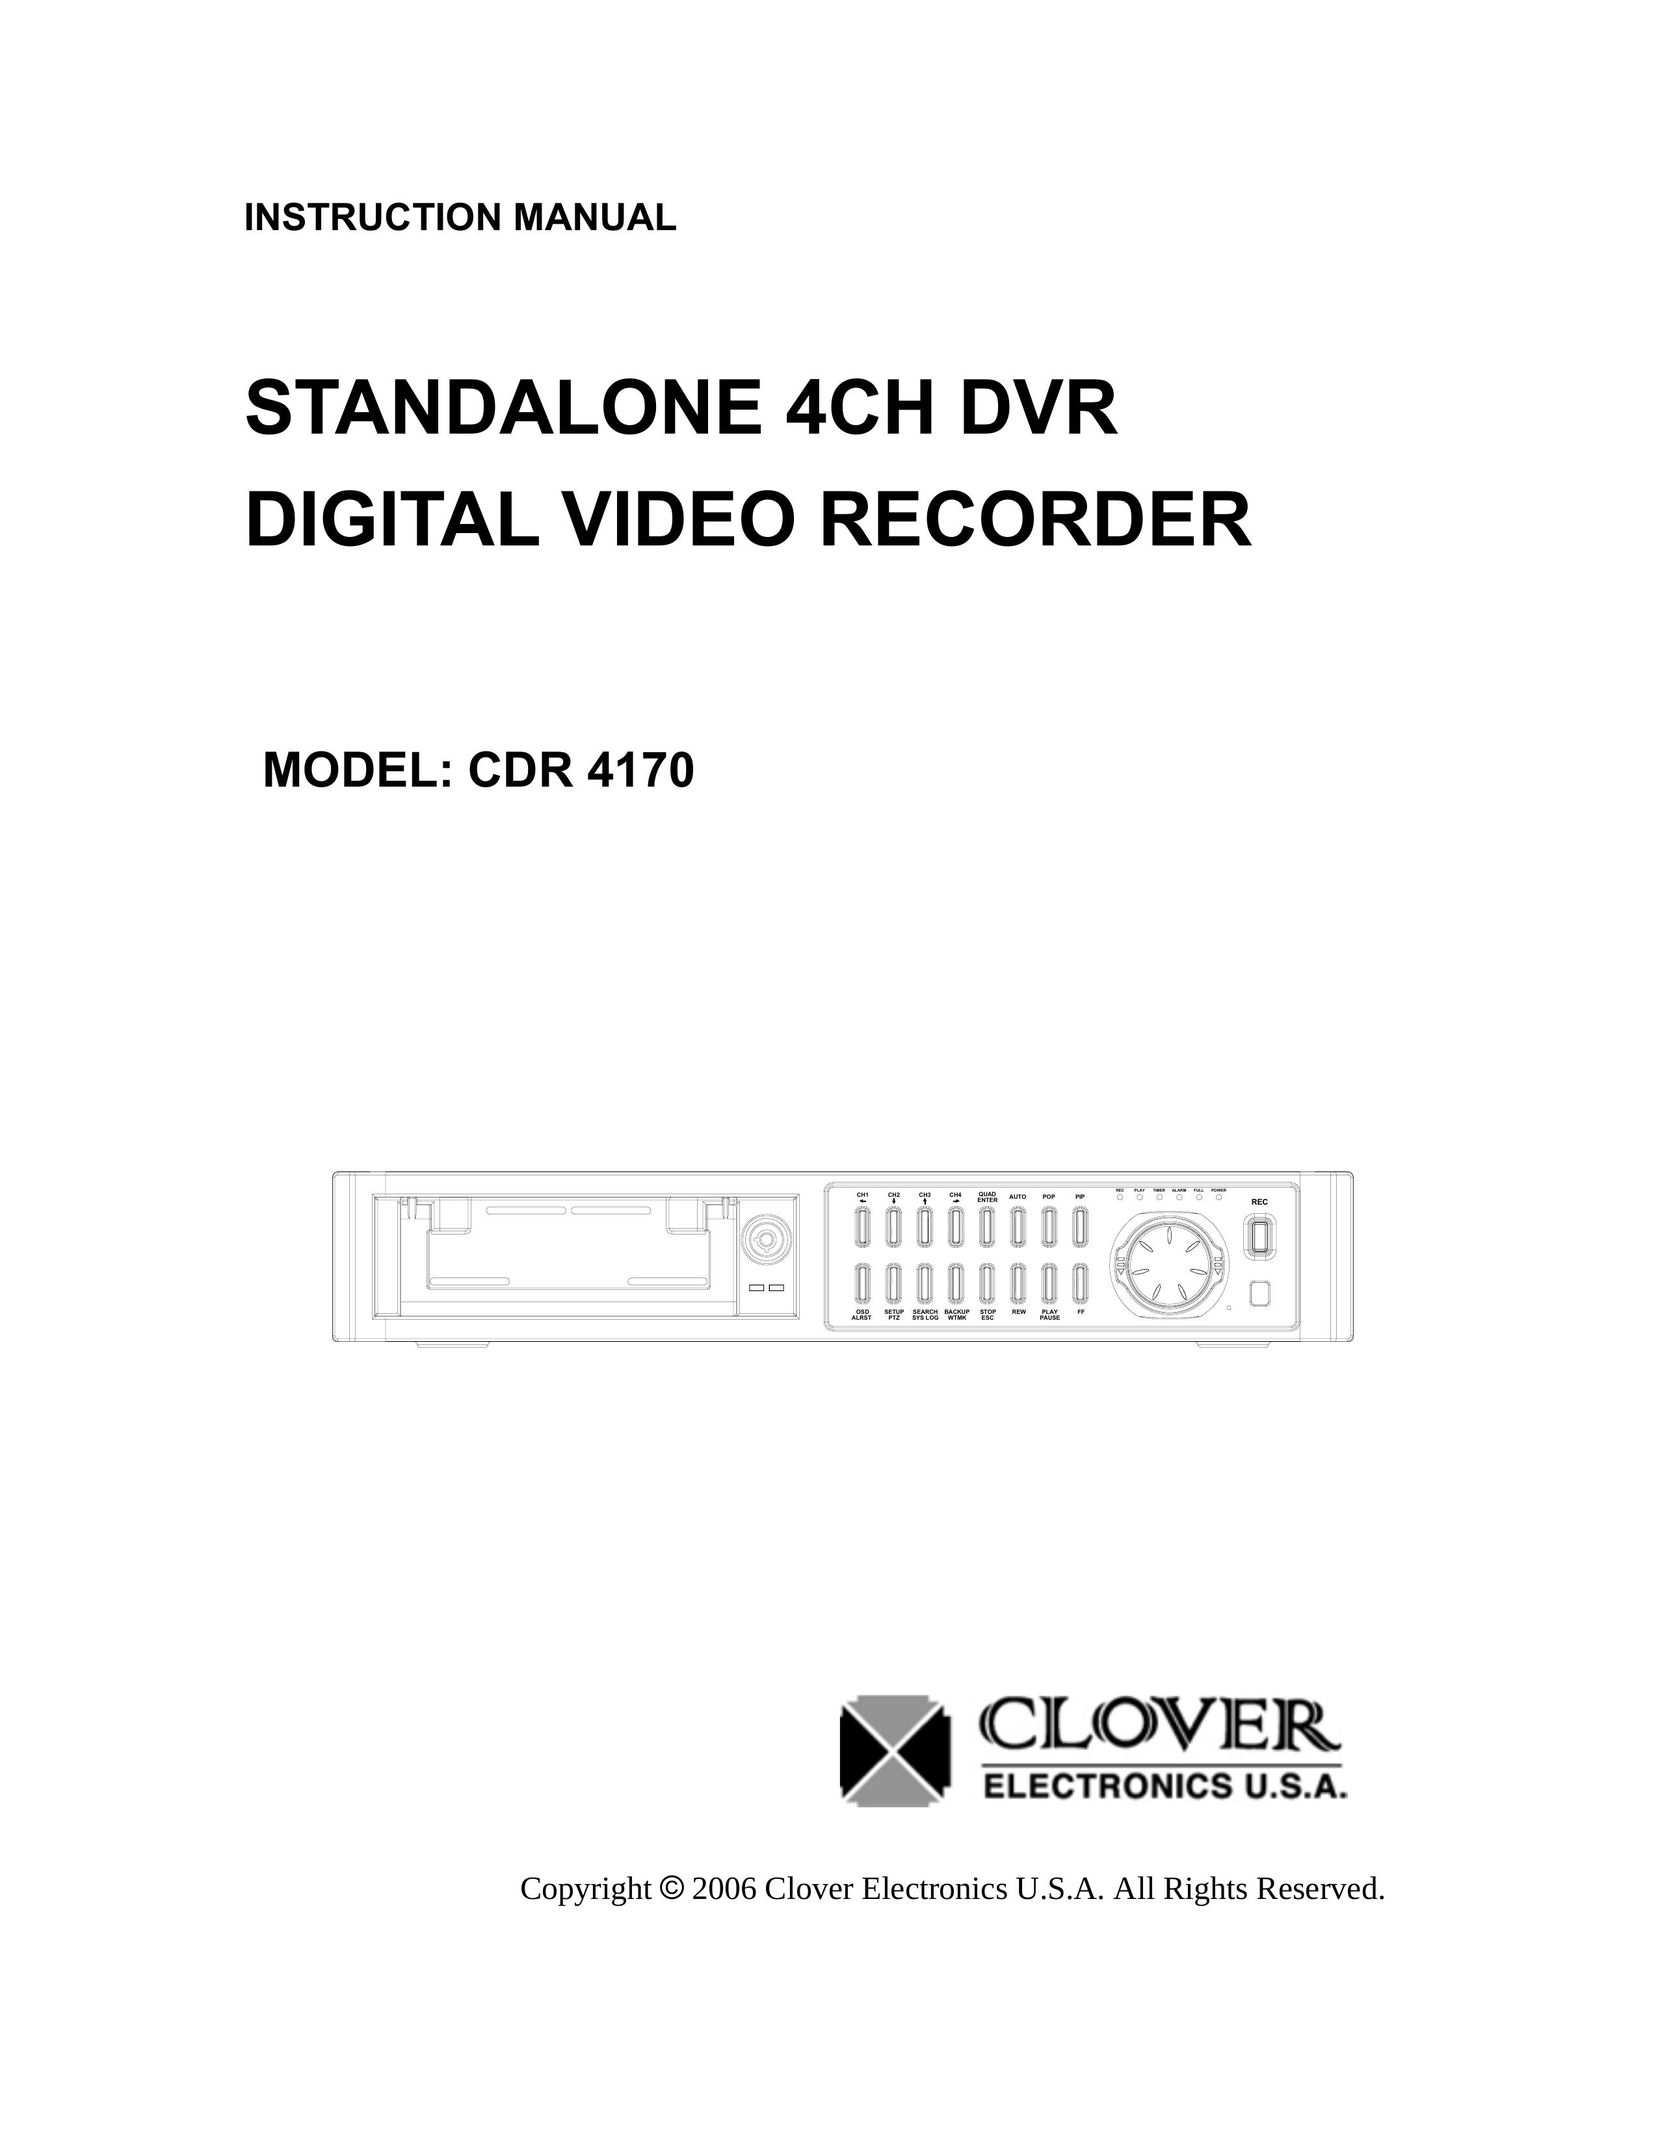 Clover Electronics CDR 4170 DVR User Manual